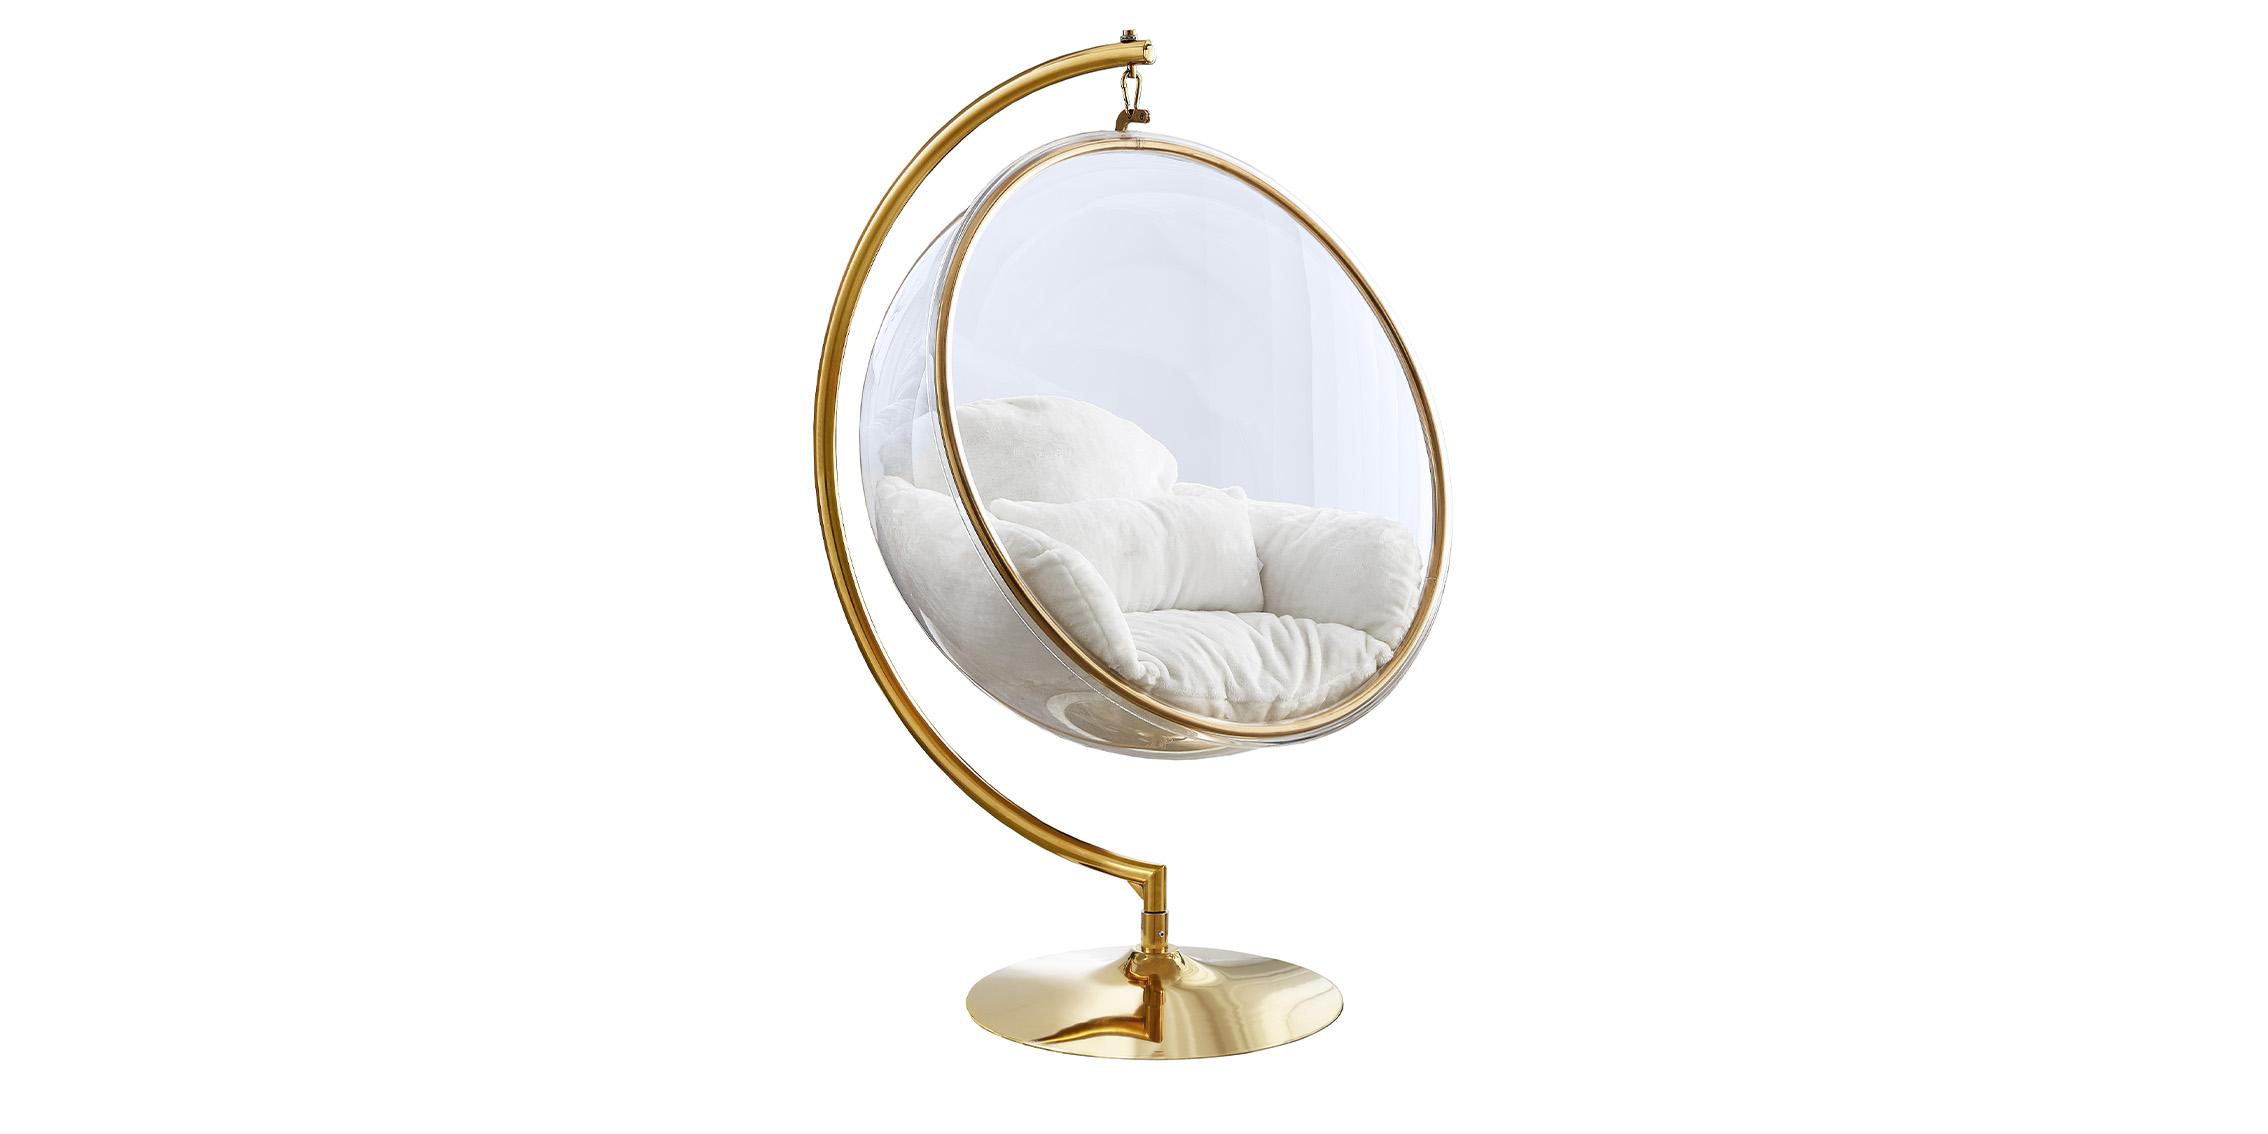 Contemporary, Modern Accent Chair LUNA 508Fur 508Fur in White, Gold Fur